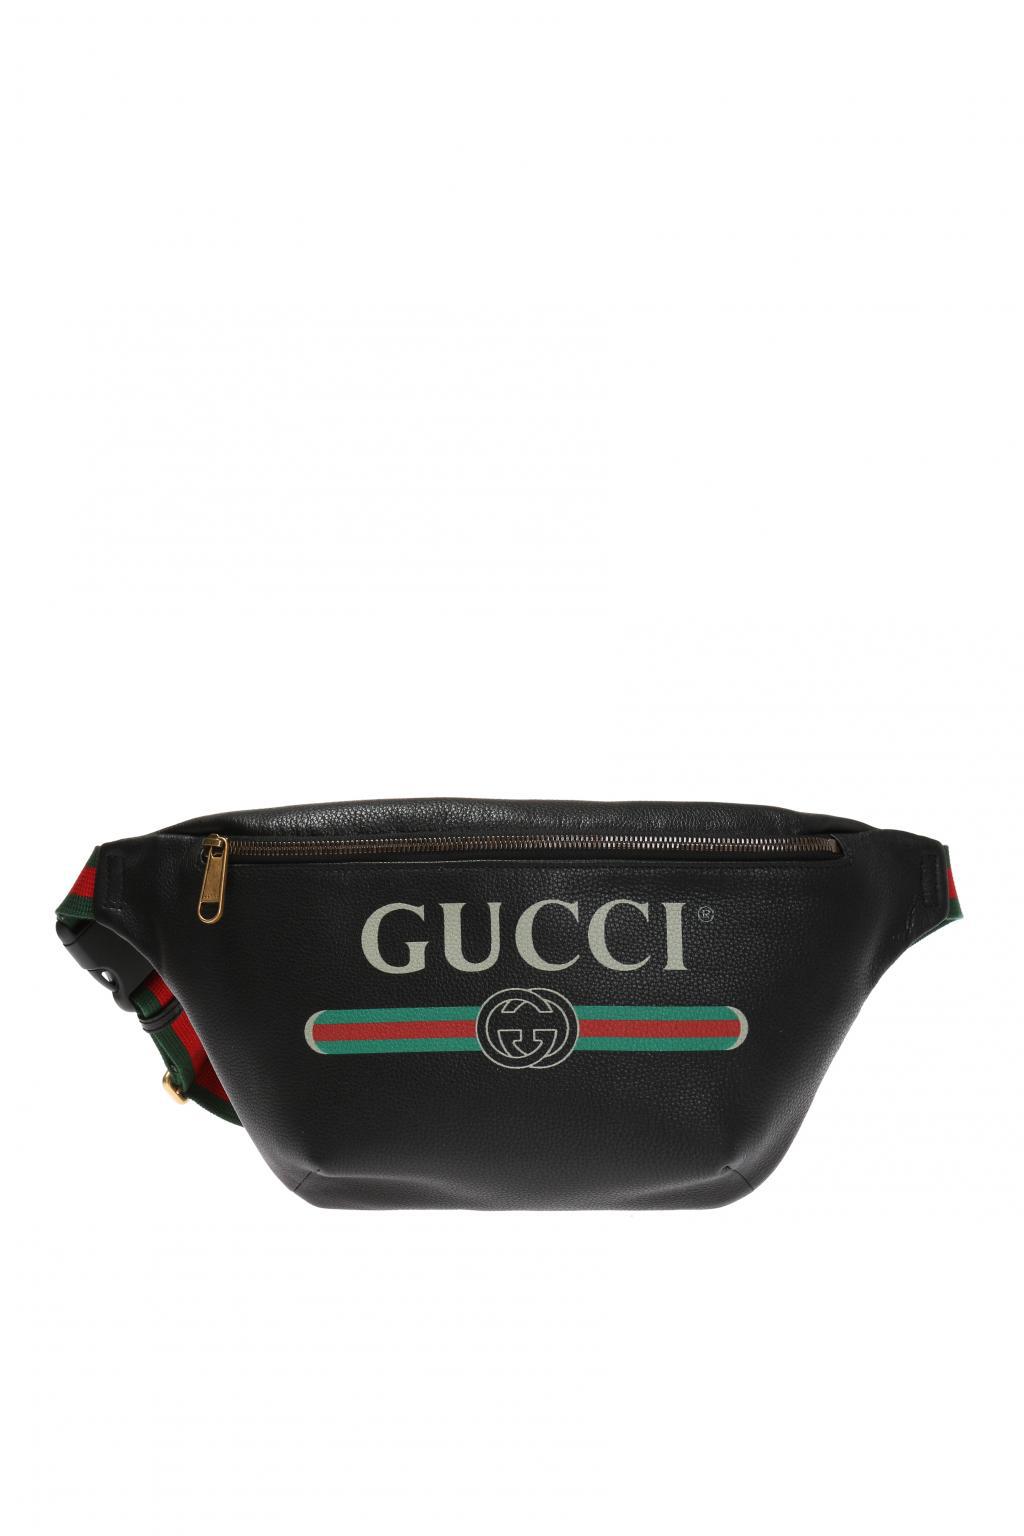 Gucci Black Fake Logo Print Leather Cross-body Bag for Men - Lyst